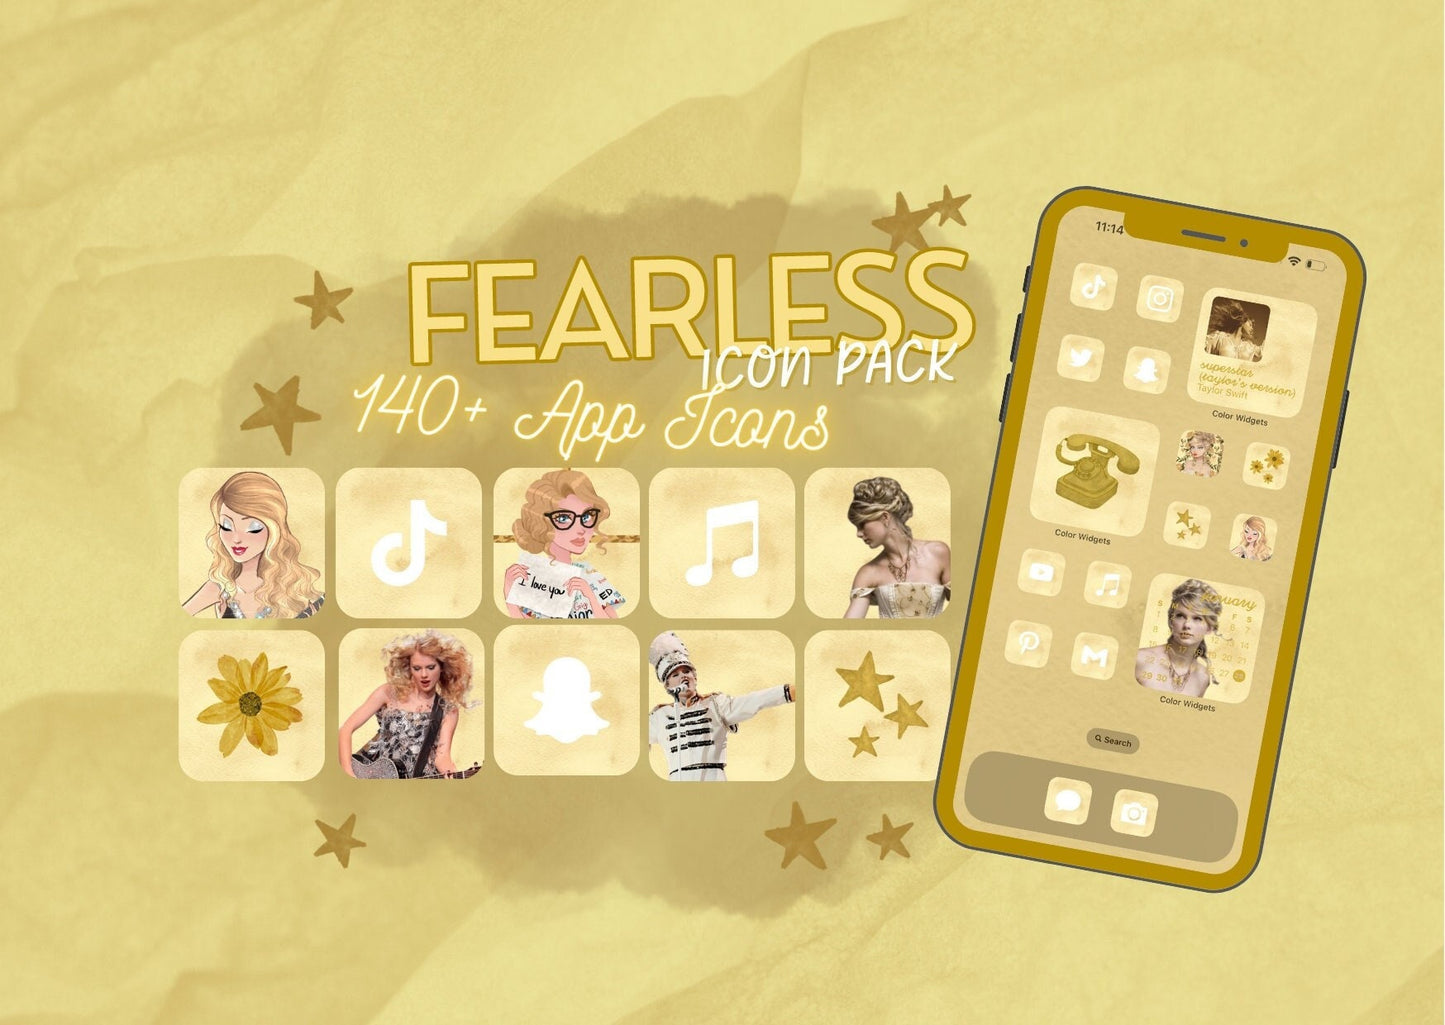 Fearless App Icons | For iPhone, iPad, Android, Custom Widgets, Phone Theme, Swiftie